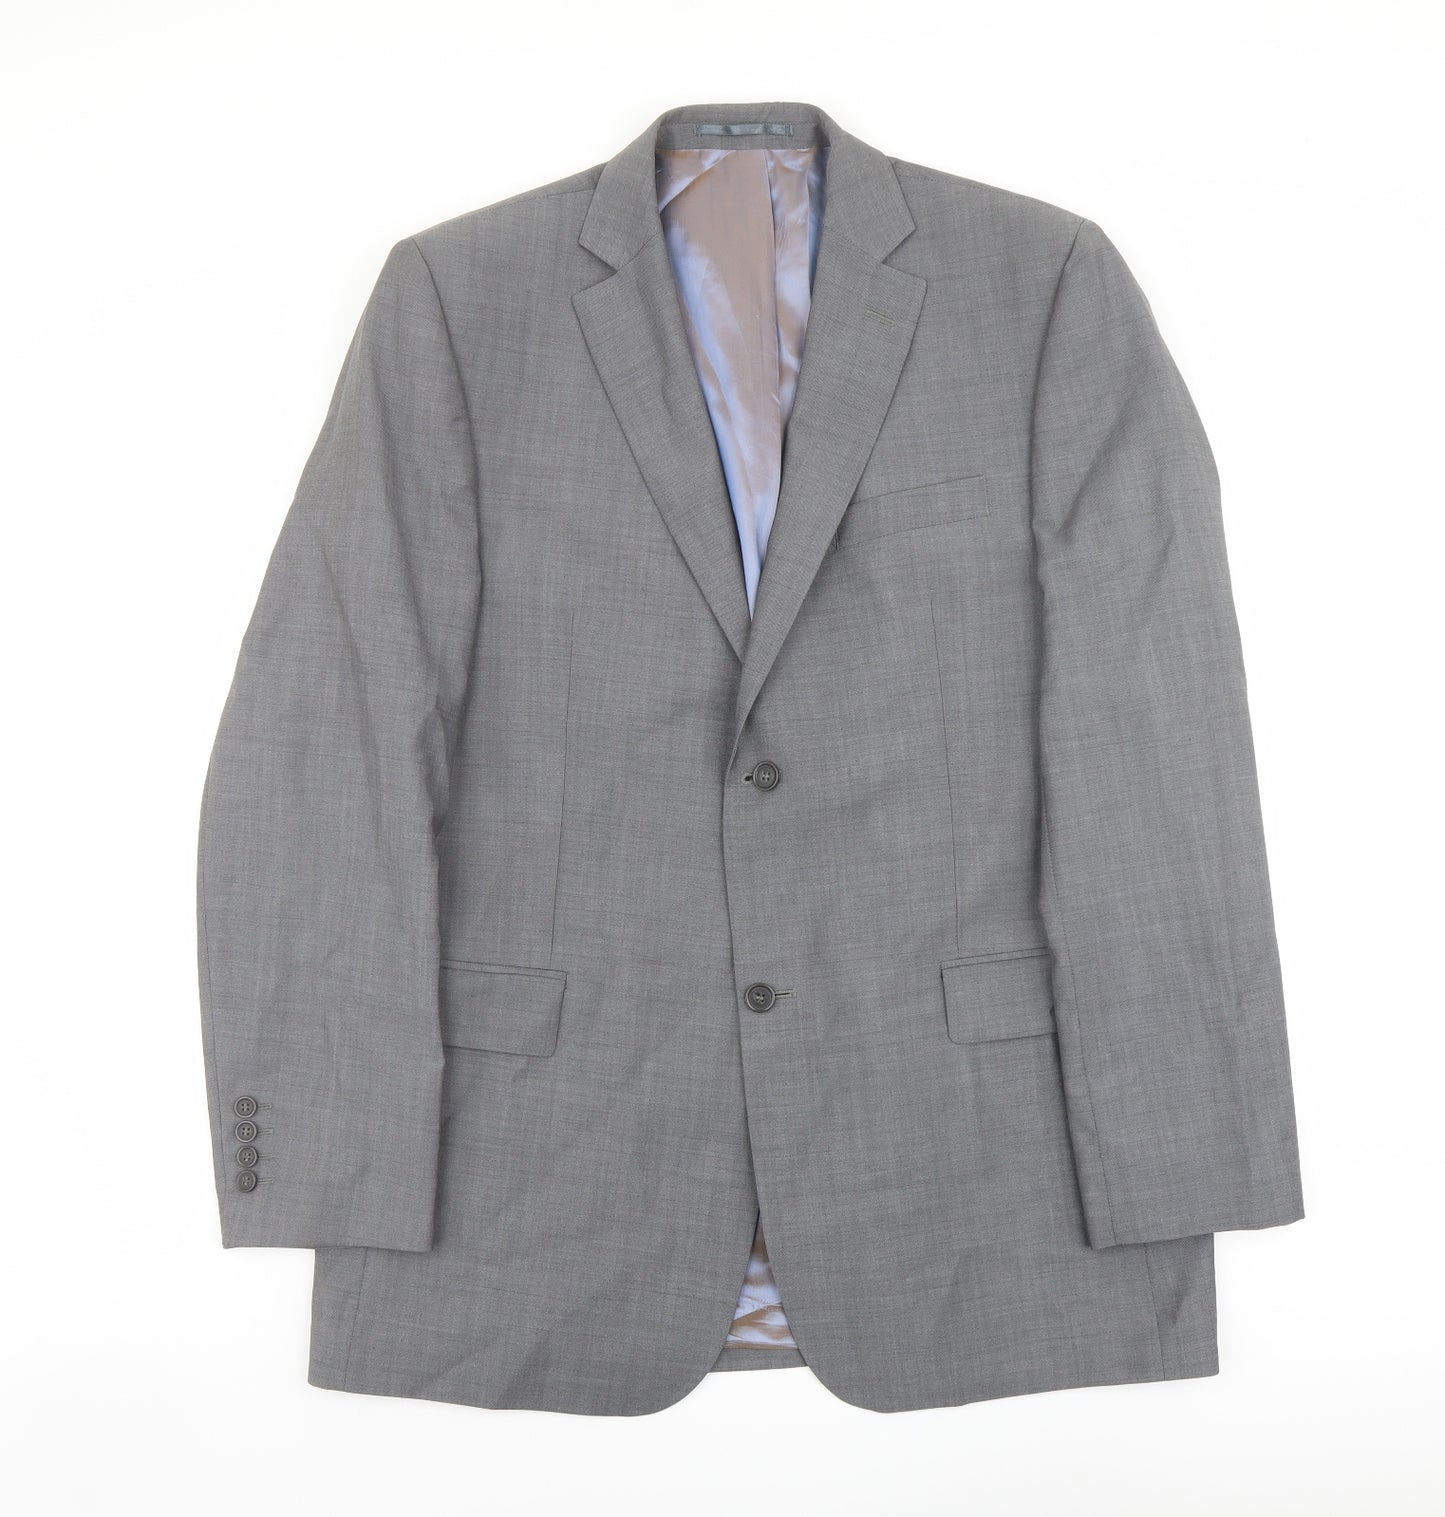 Linea Mens Grey Wool Jacket Suit Jacket Size 42 Regular